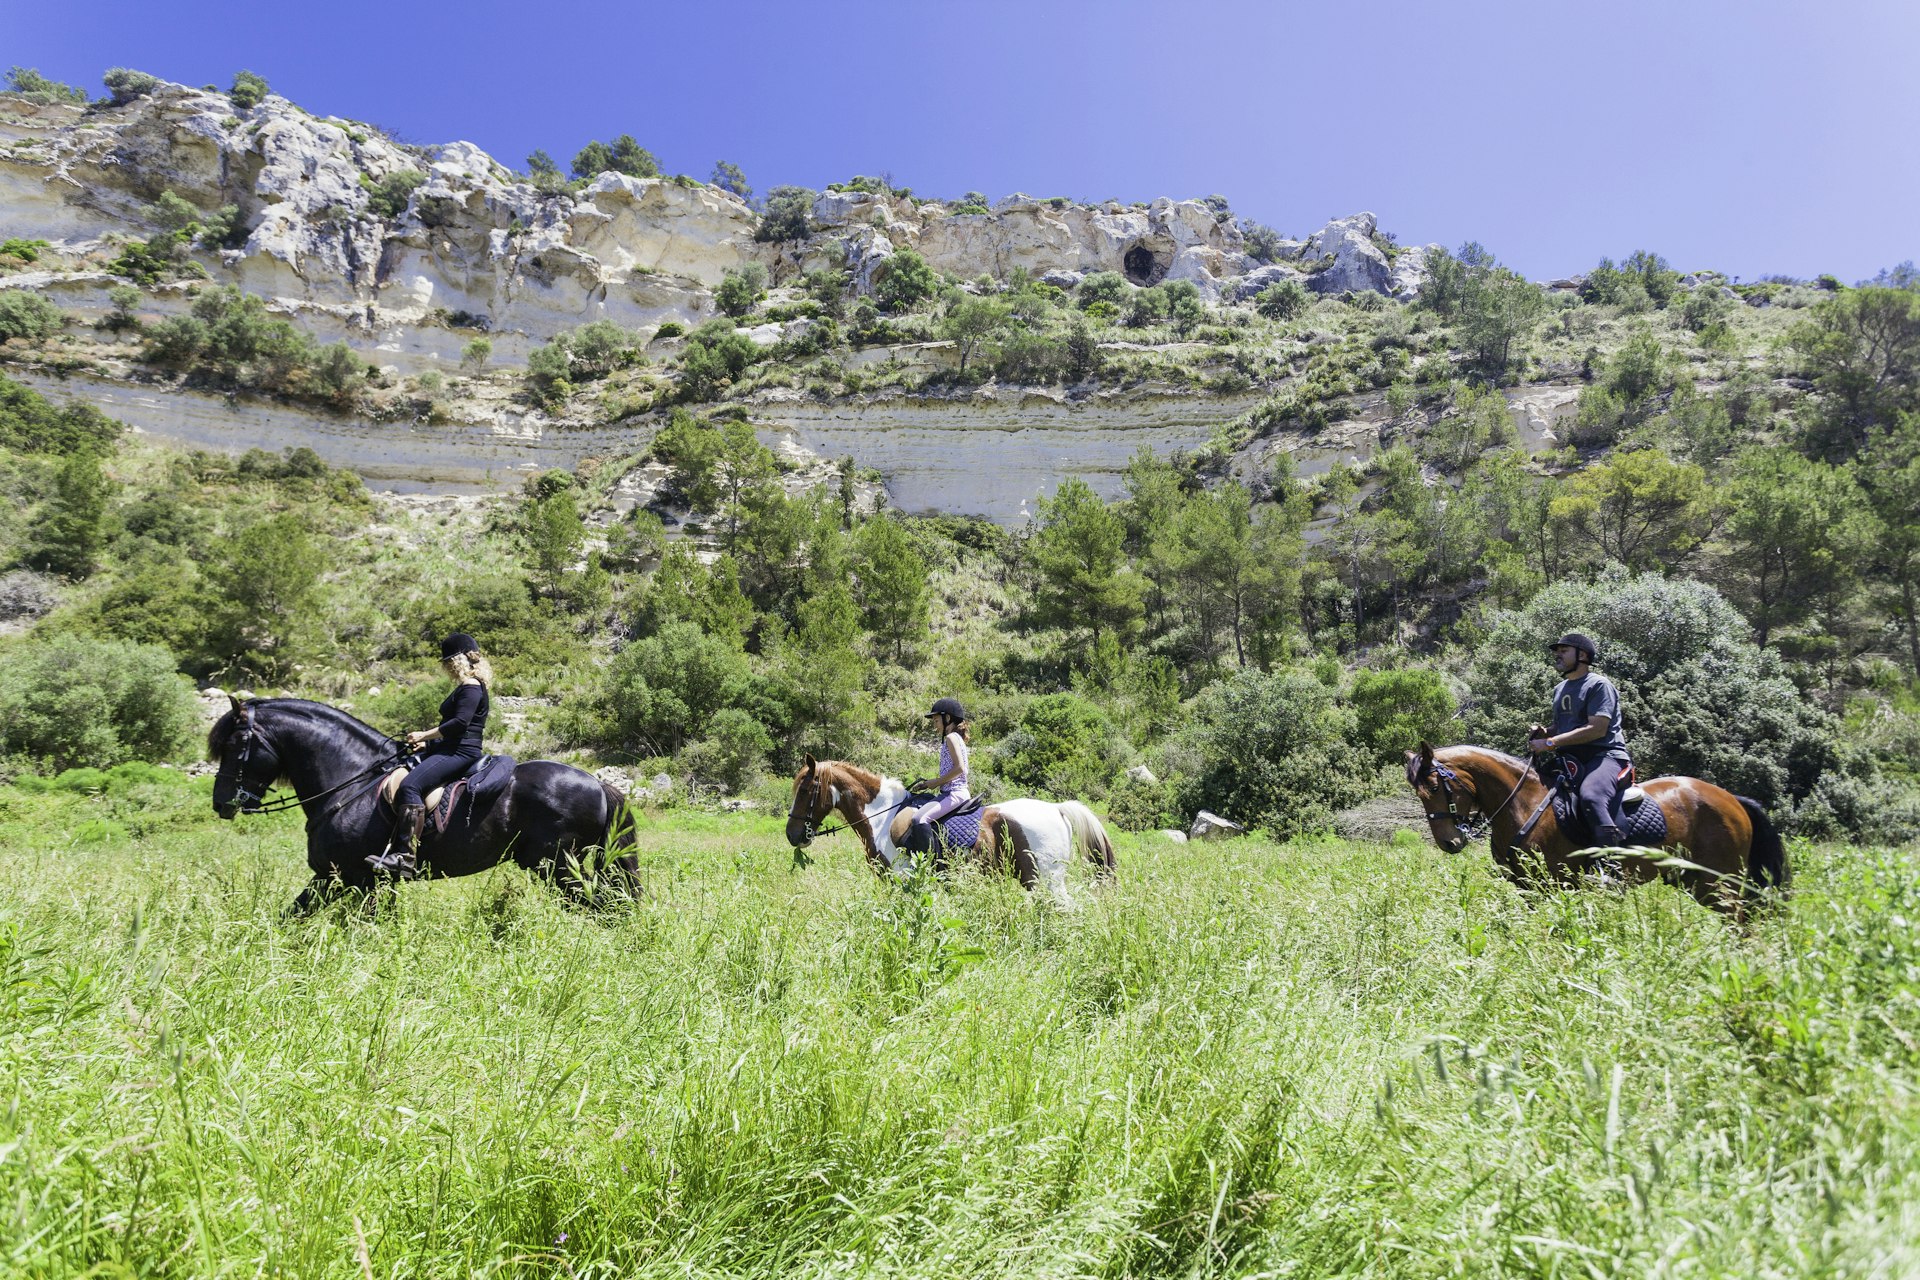 Three horseback riders following a trail through long grass, with steep cliffs rising behind them